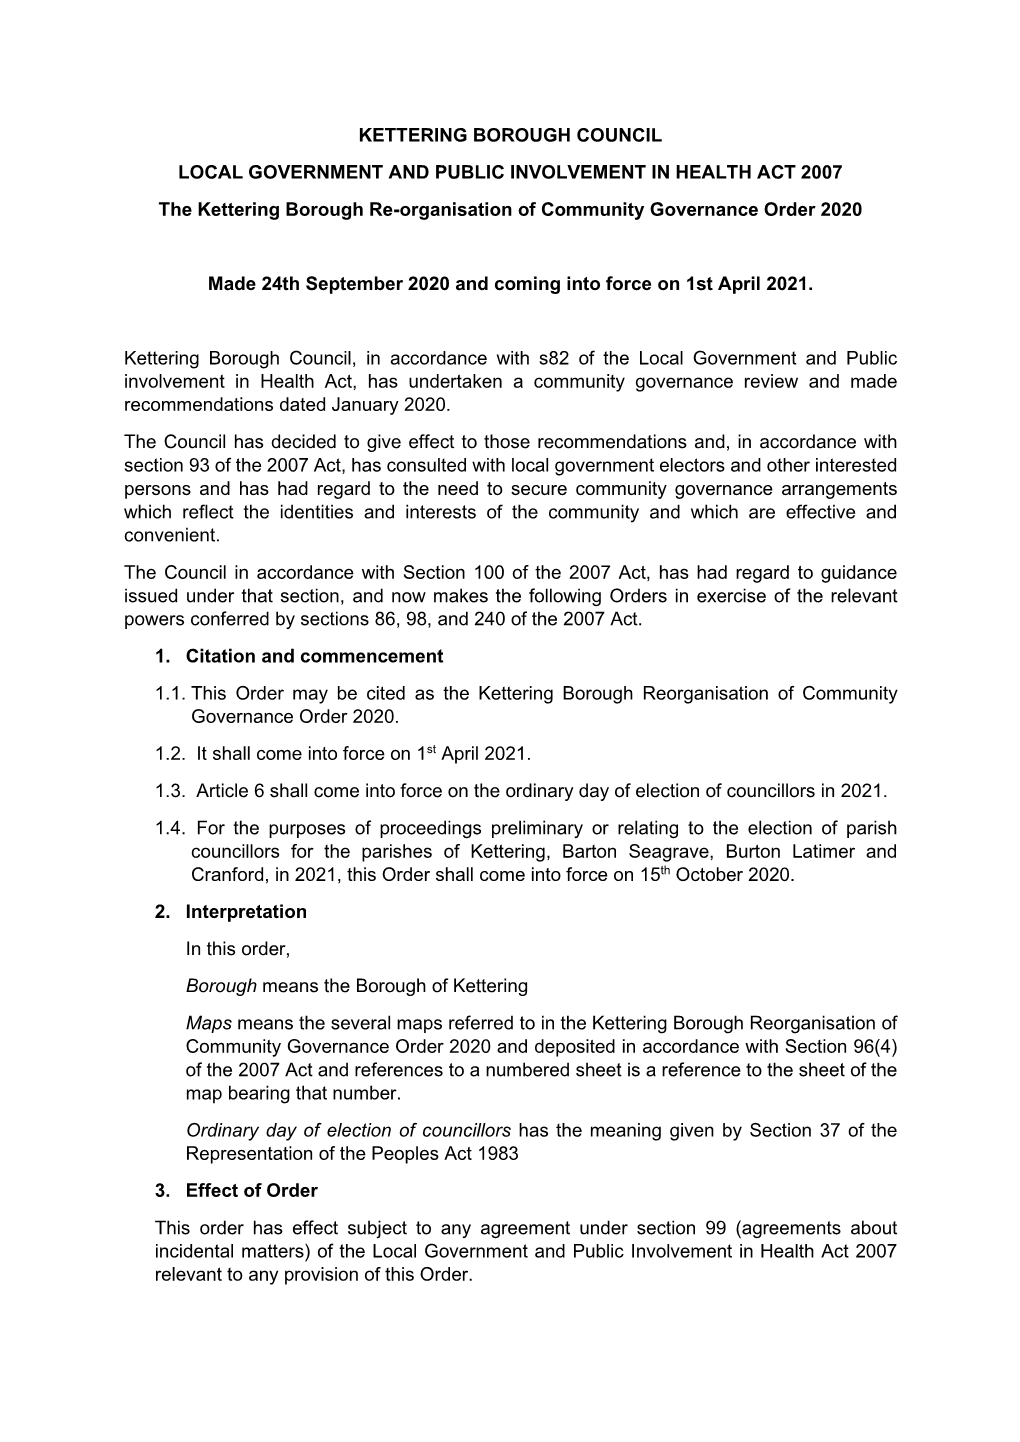 The Kettering Borough Re-Organisation of Community Governance Order 2020